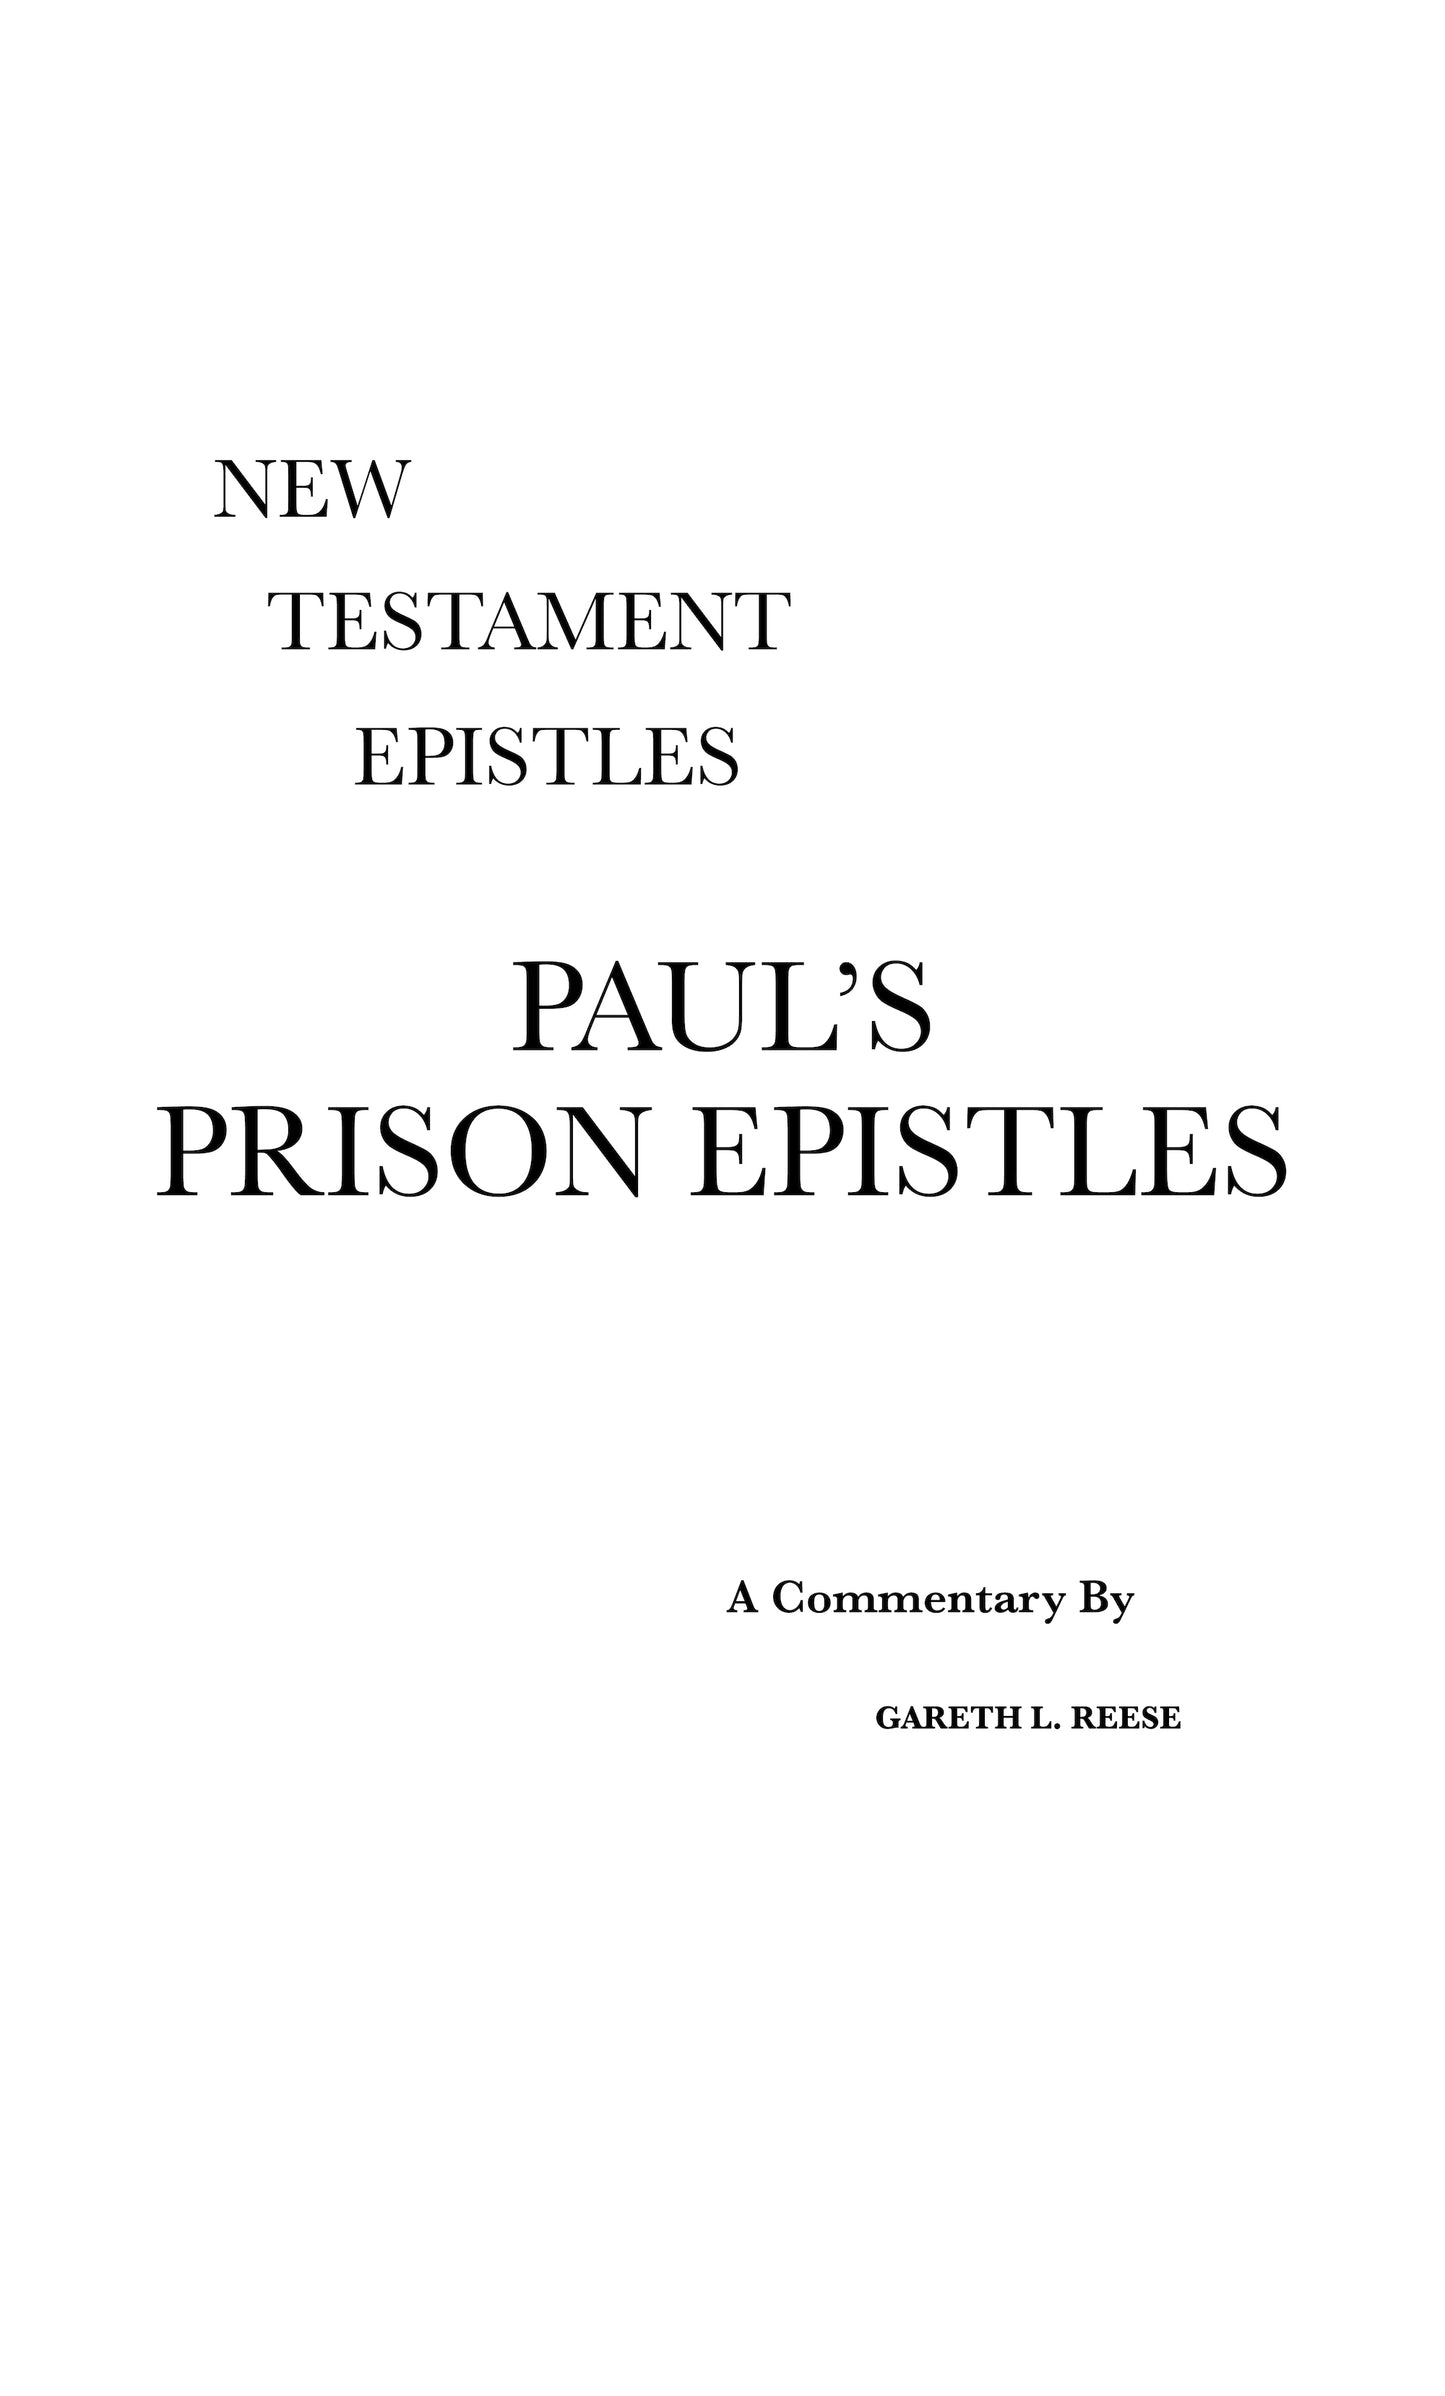 Paul's Prison Epistles